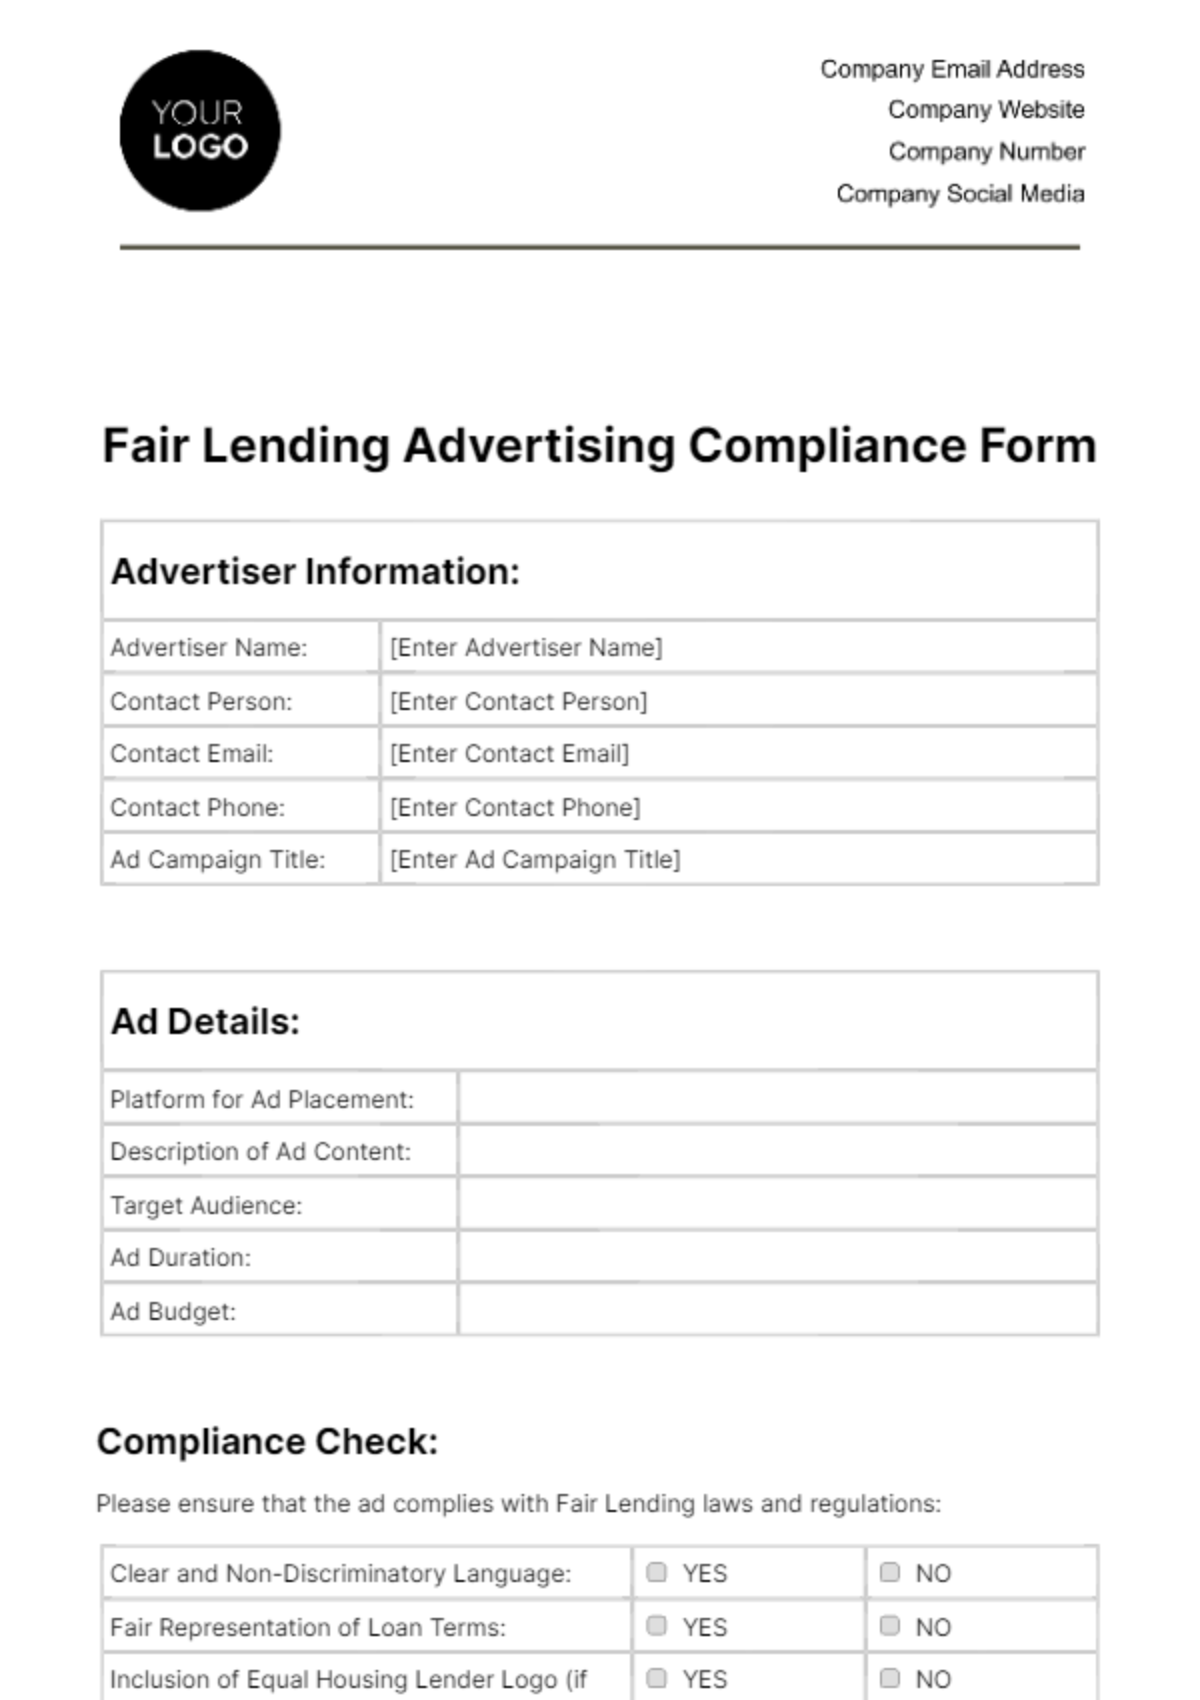 Fair Lending Advertising Compliance Form Template